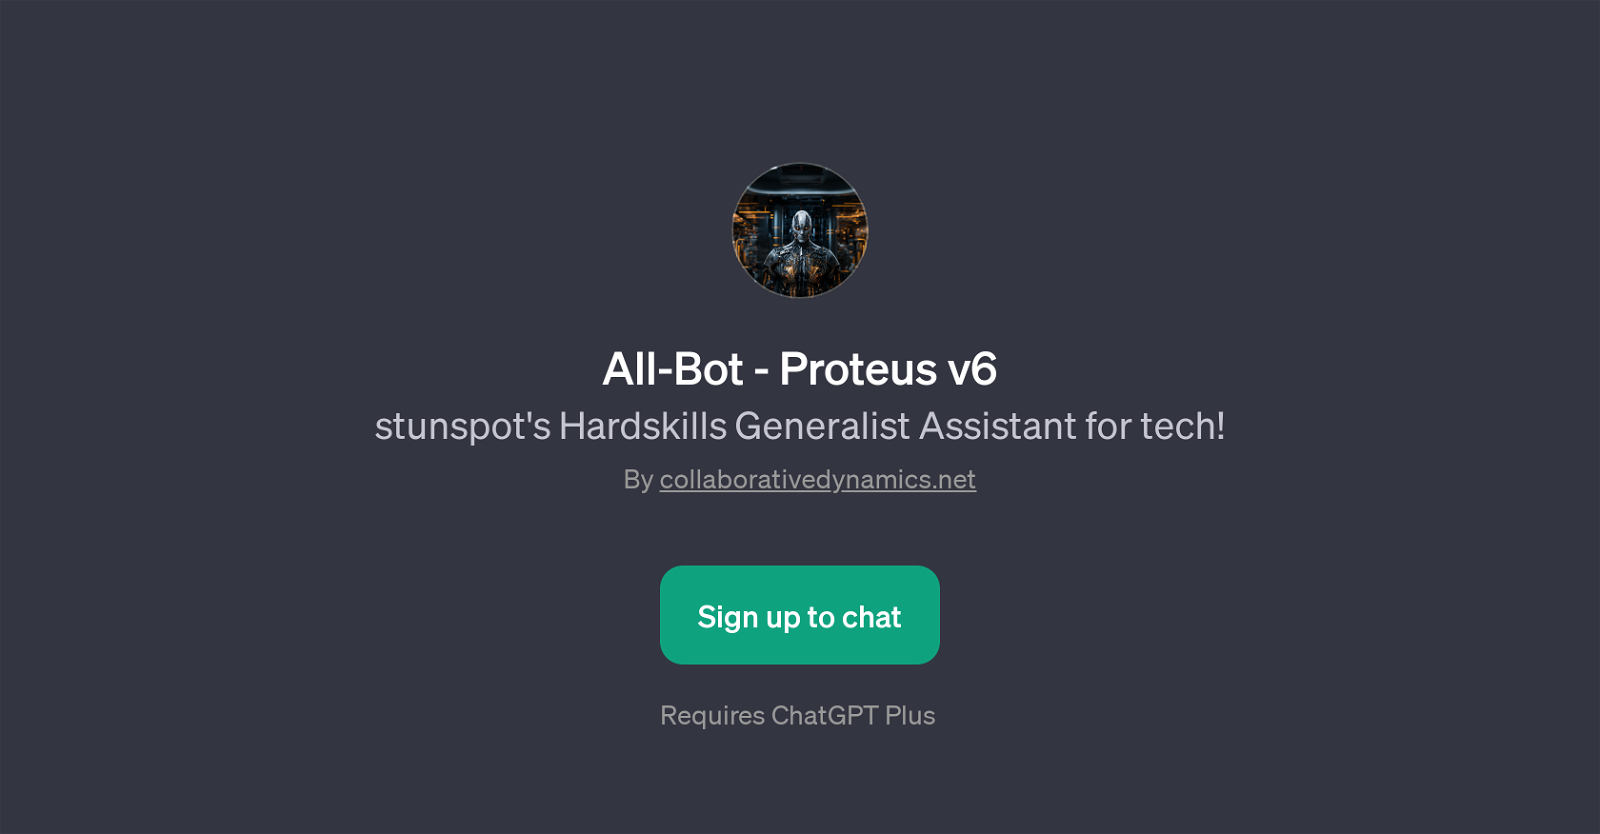 All-Bot - Proteus v6 website